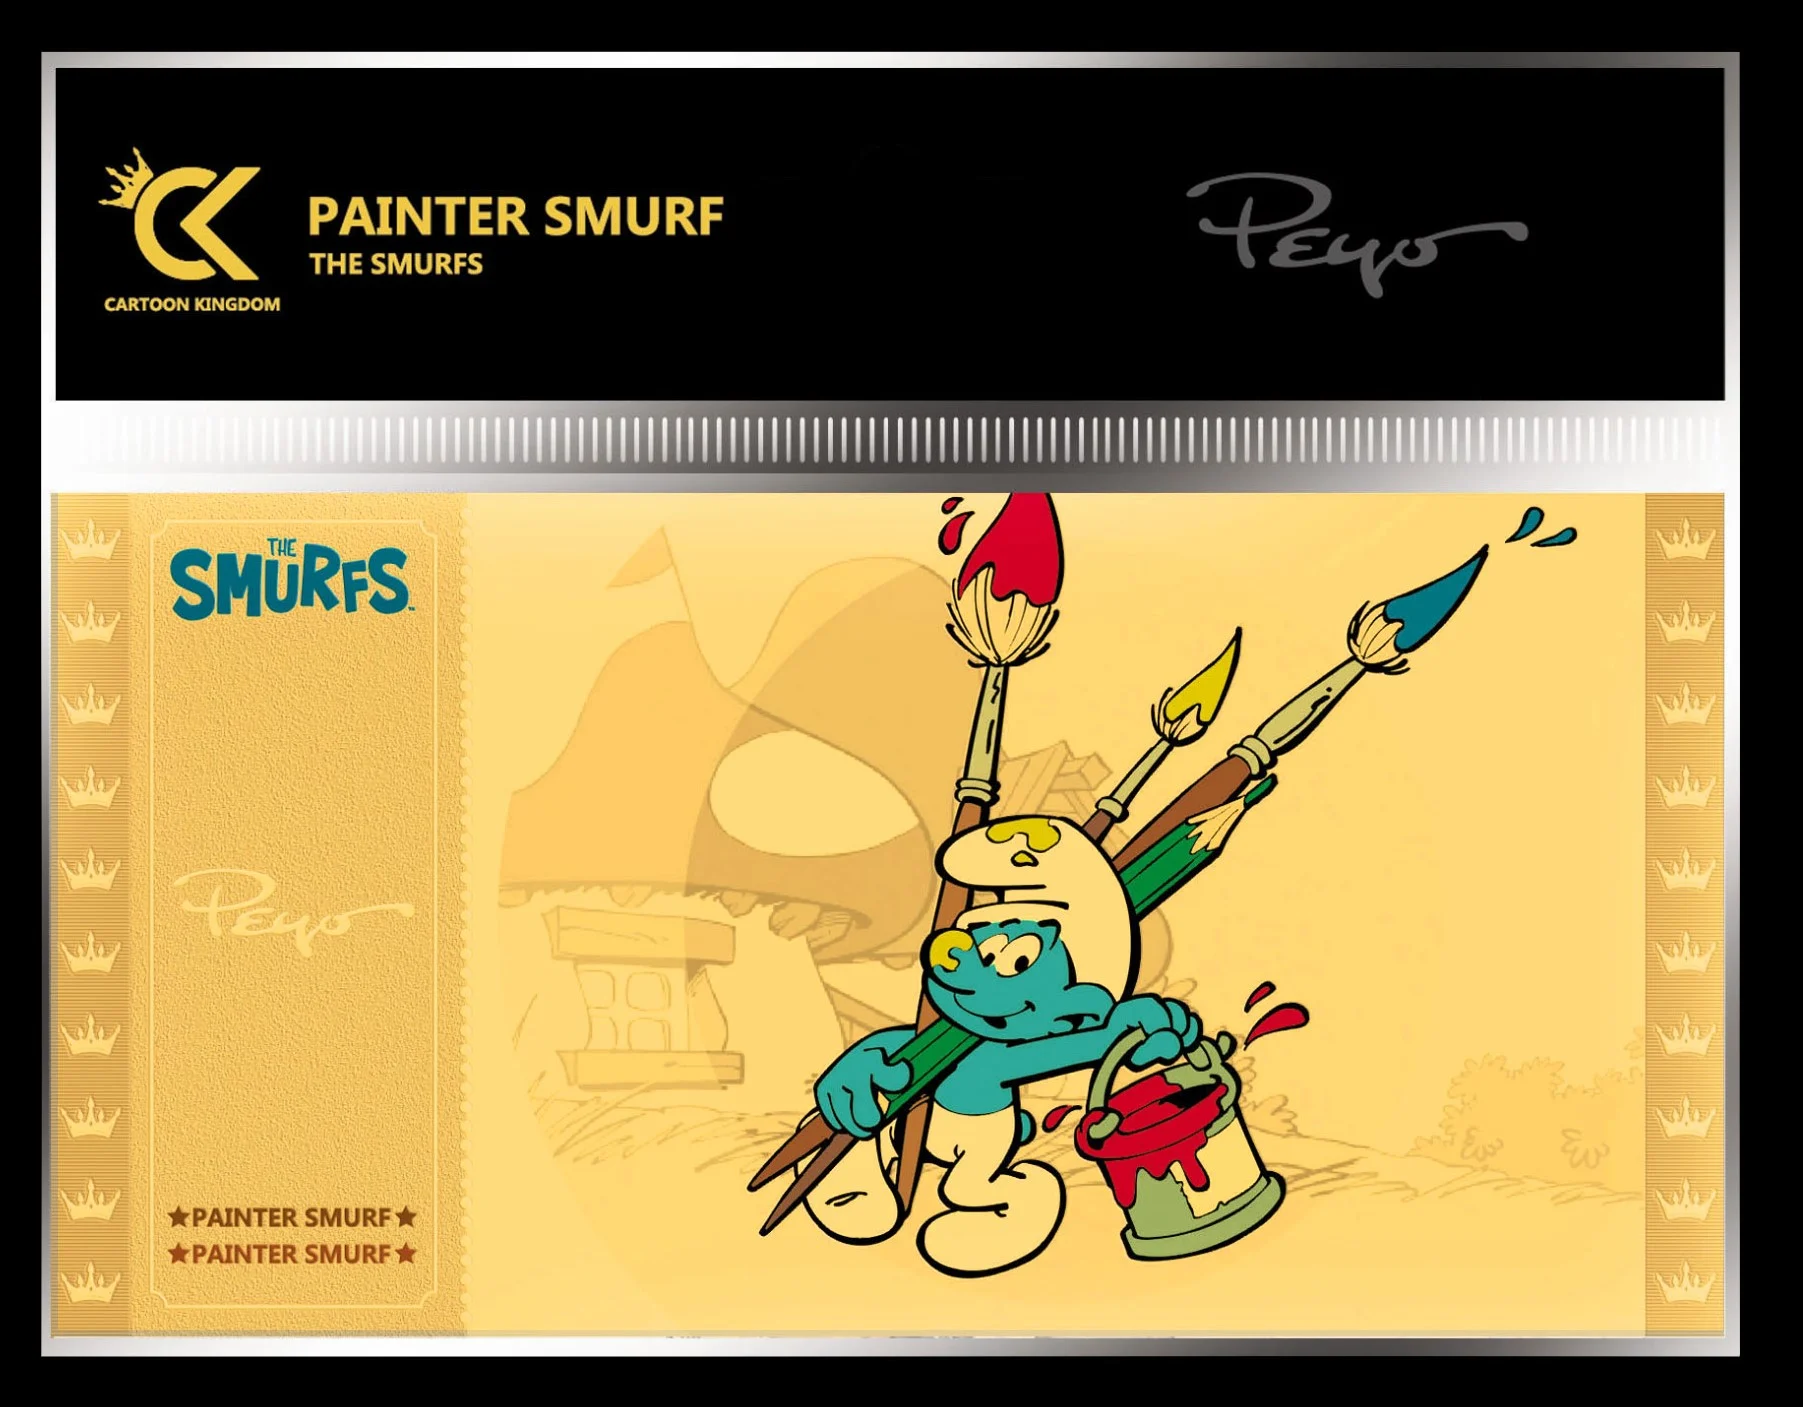 THE SMURFS - Painter Smurf (Verfsmurf) - Golden Ticket CK-TS06